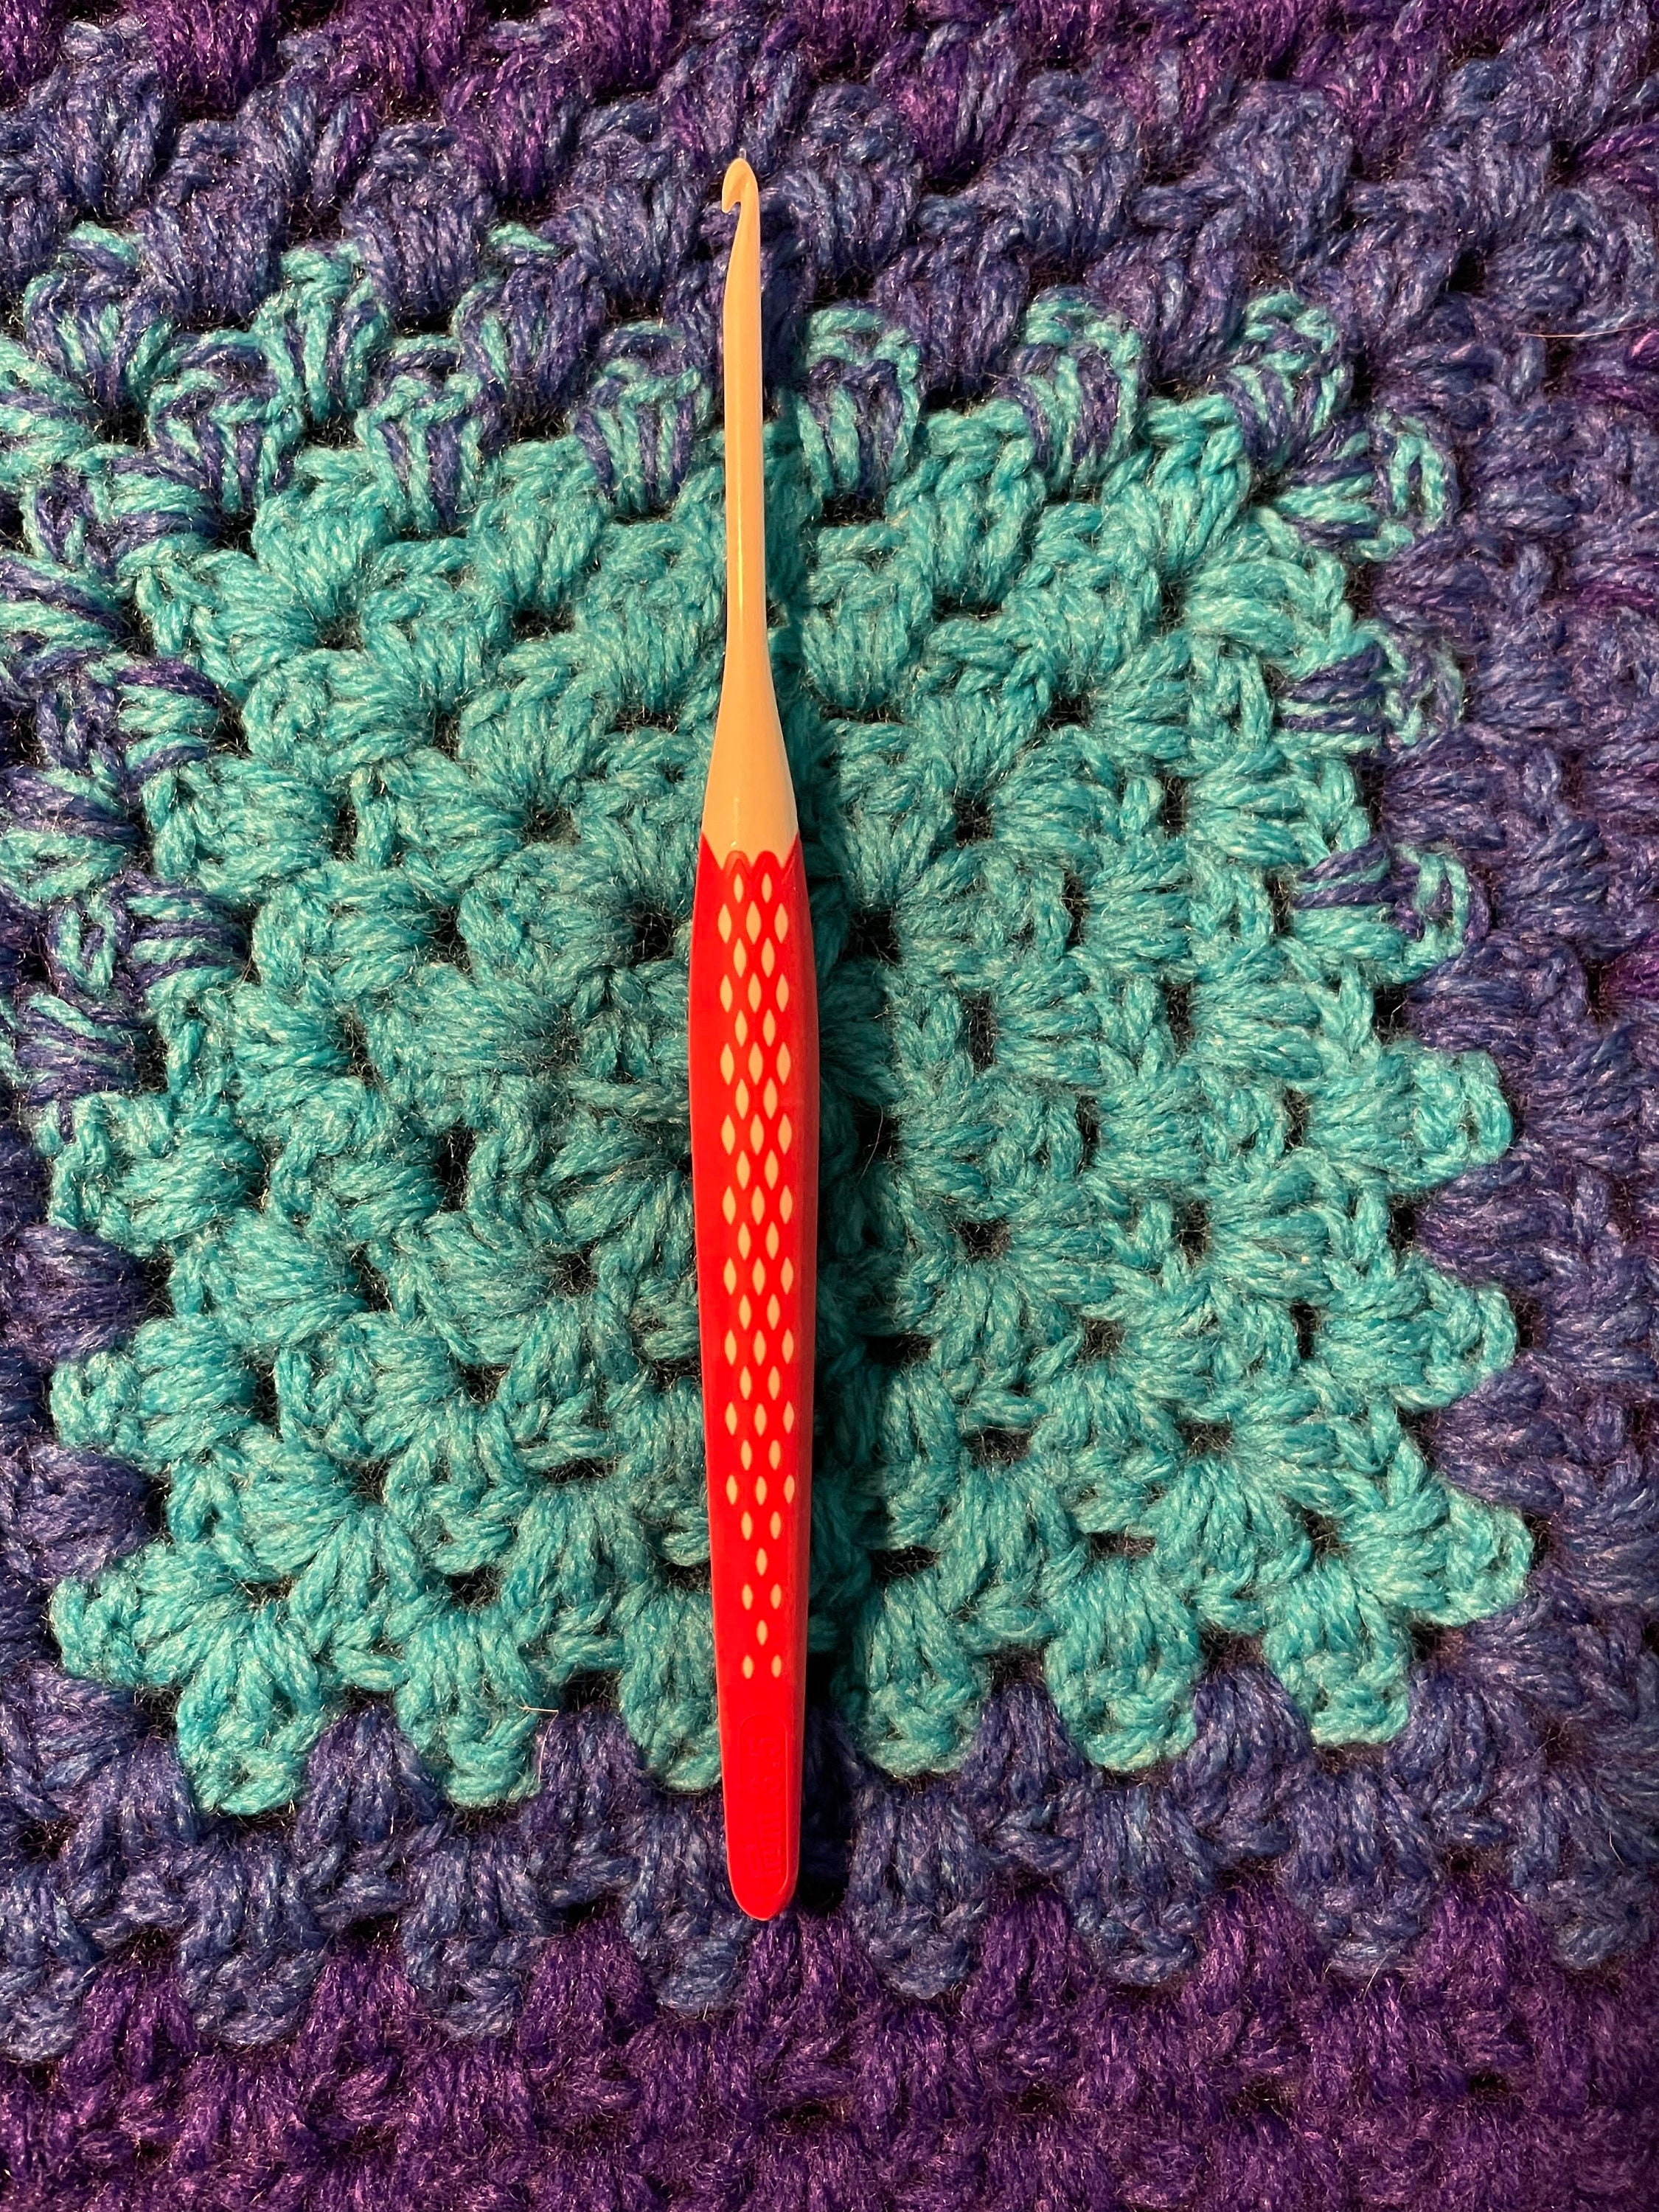  Prym Crochet Hook for Wool Ergonomics 3.50-6.00 mm x 1 Set,  Multi, One Size